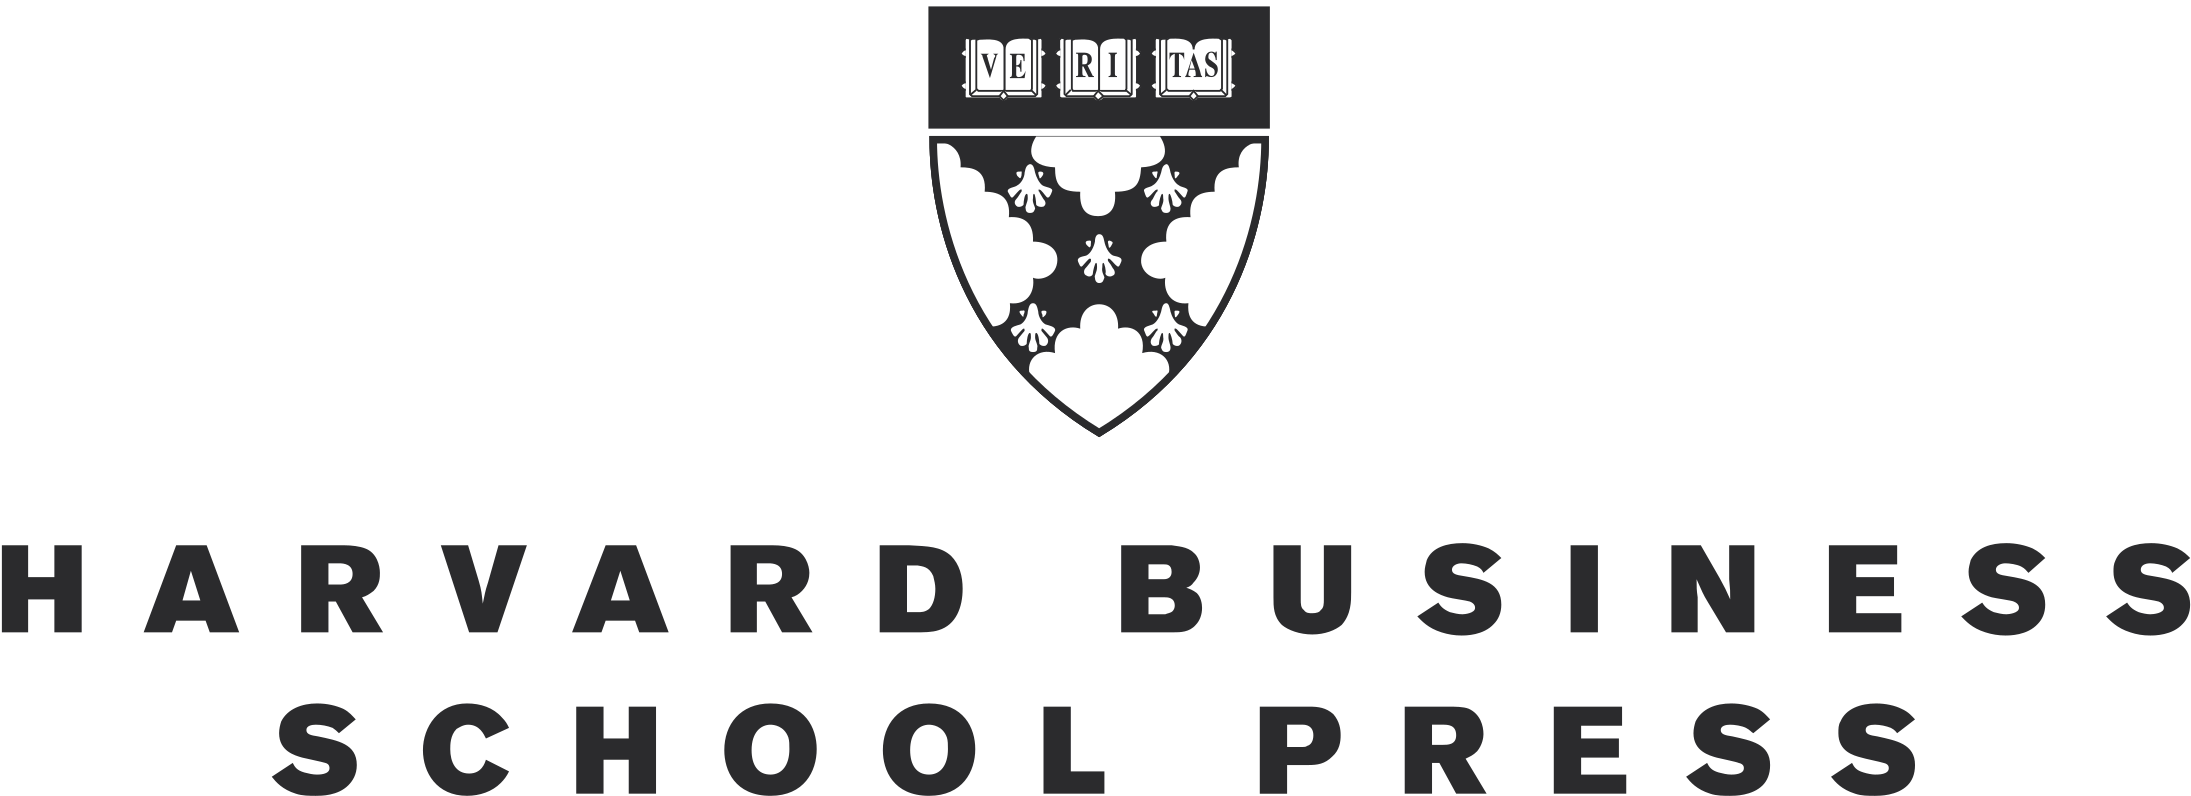 Harvard Business School Press Logo Png Transparent - Harvard Business School Press (2400x2400), Png Download